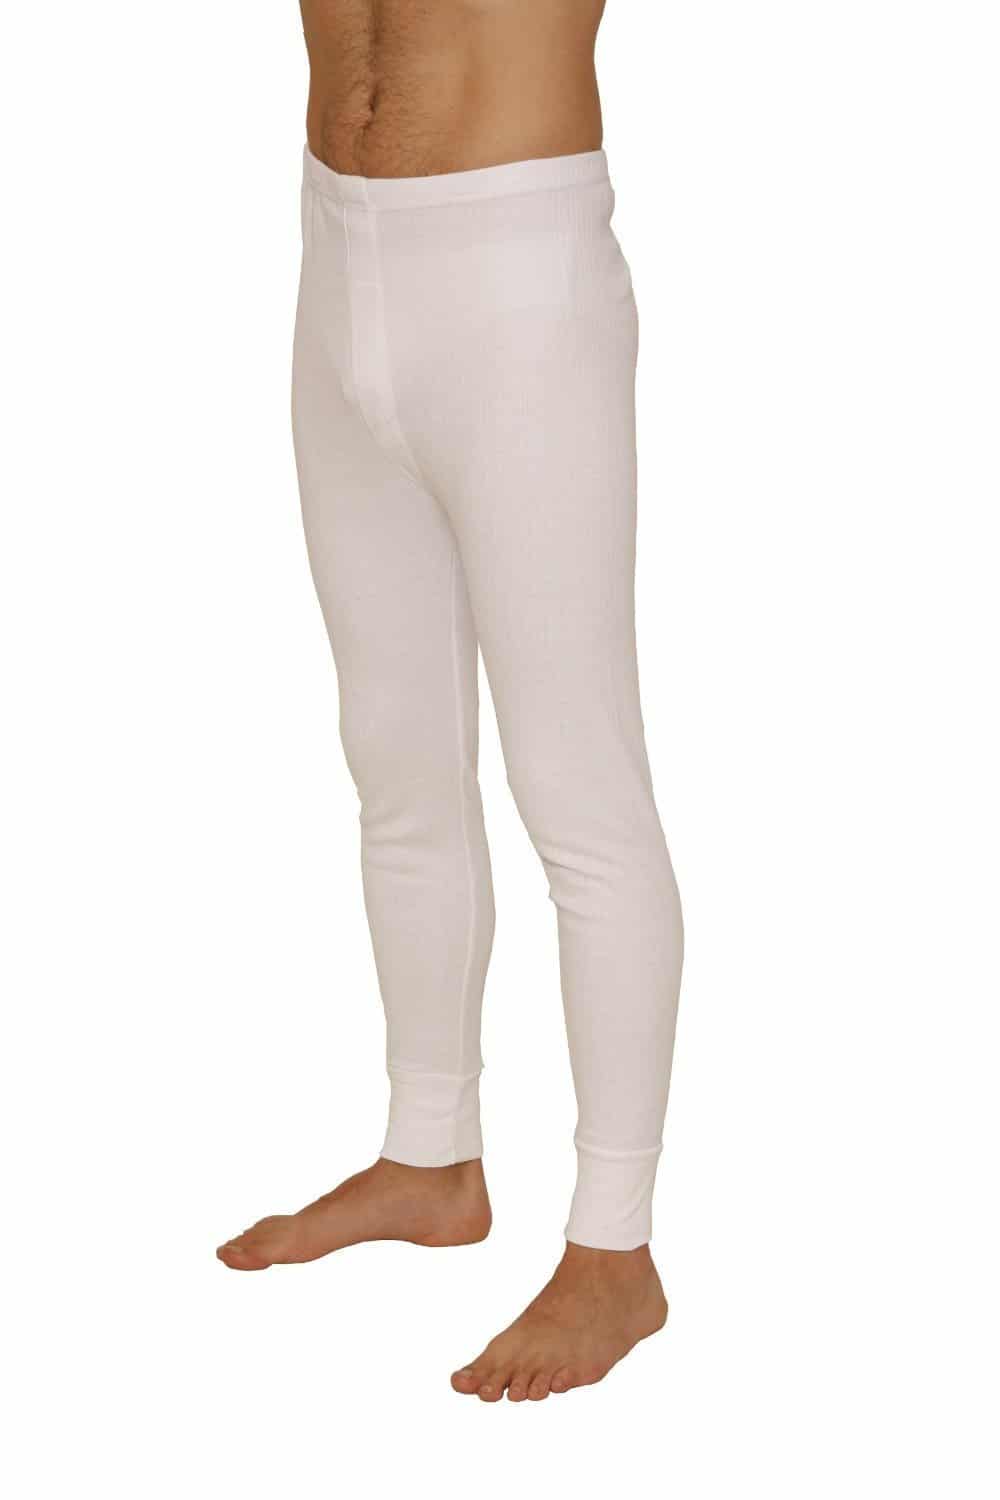 Mens Thermal Underwear Long John - white - Sub 32 Ski Clothing Hire